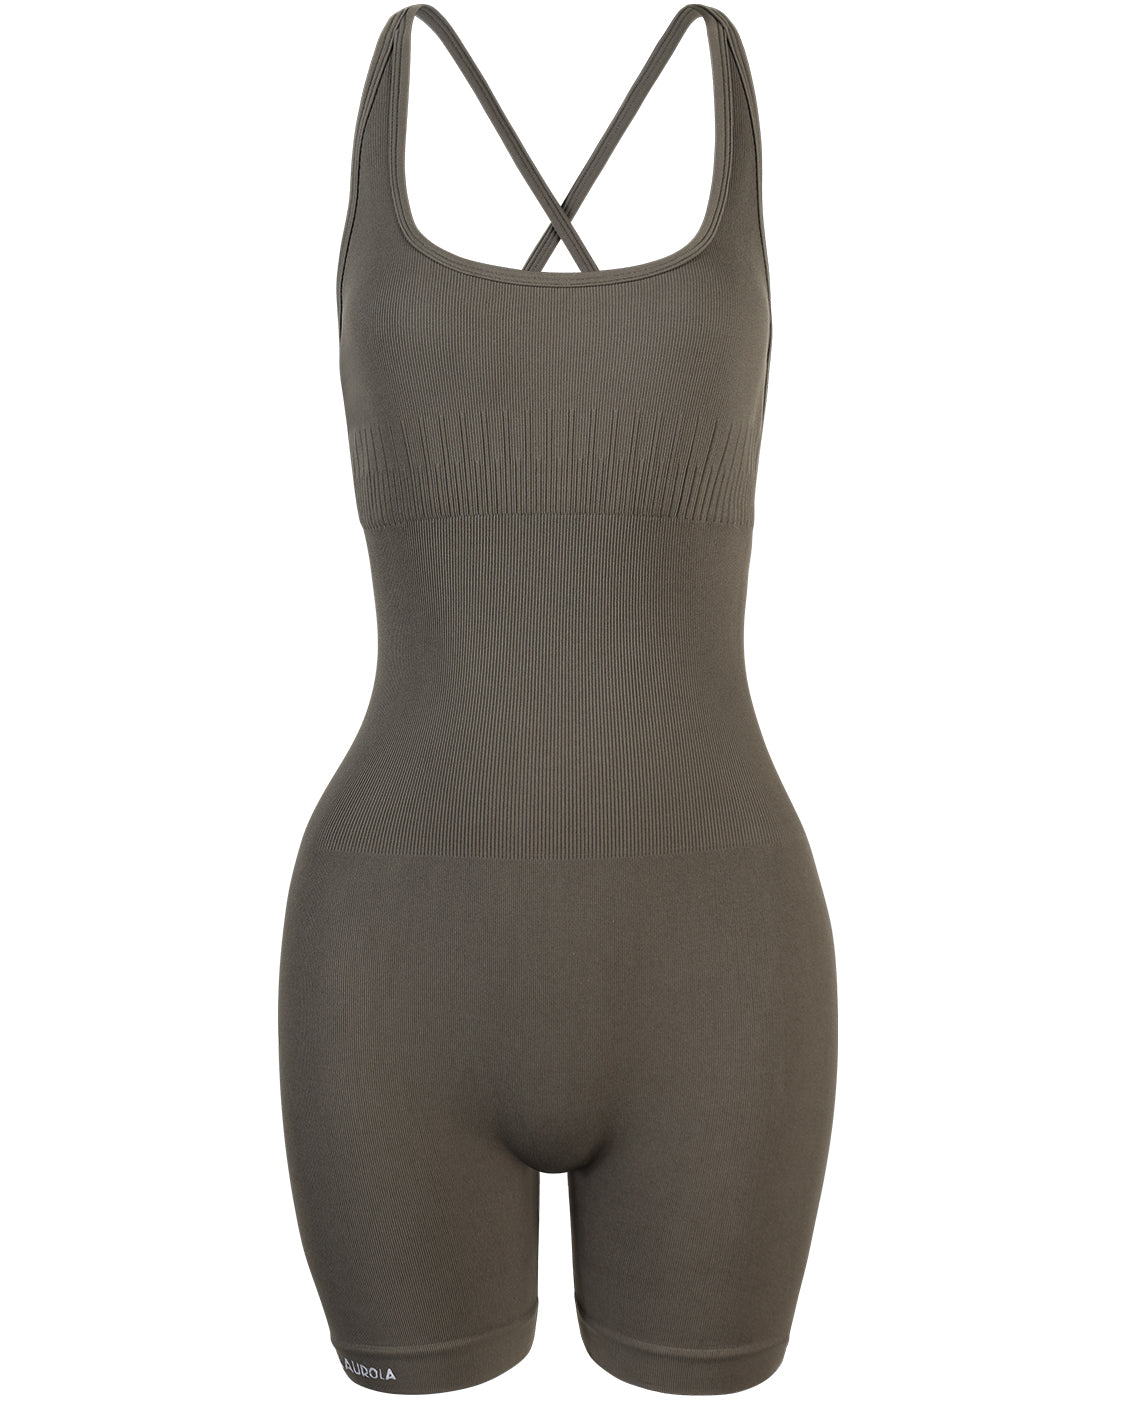 AUROLA Strapy Romper for Women Workout Yoga Gym Seamless One Piece Jumpsuit  Tummy Control Padded Sports Bra : : Fashion